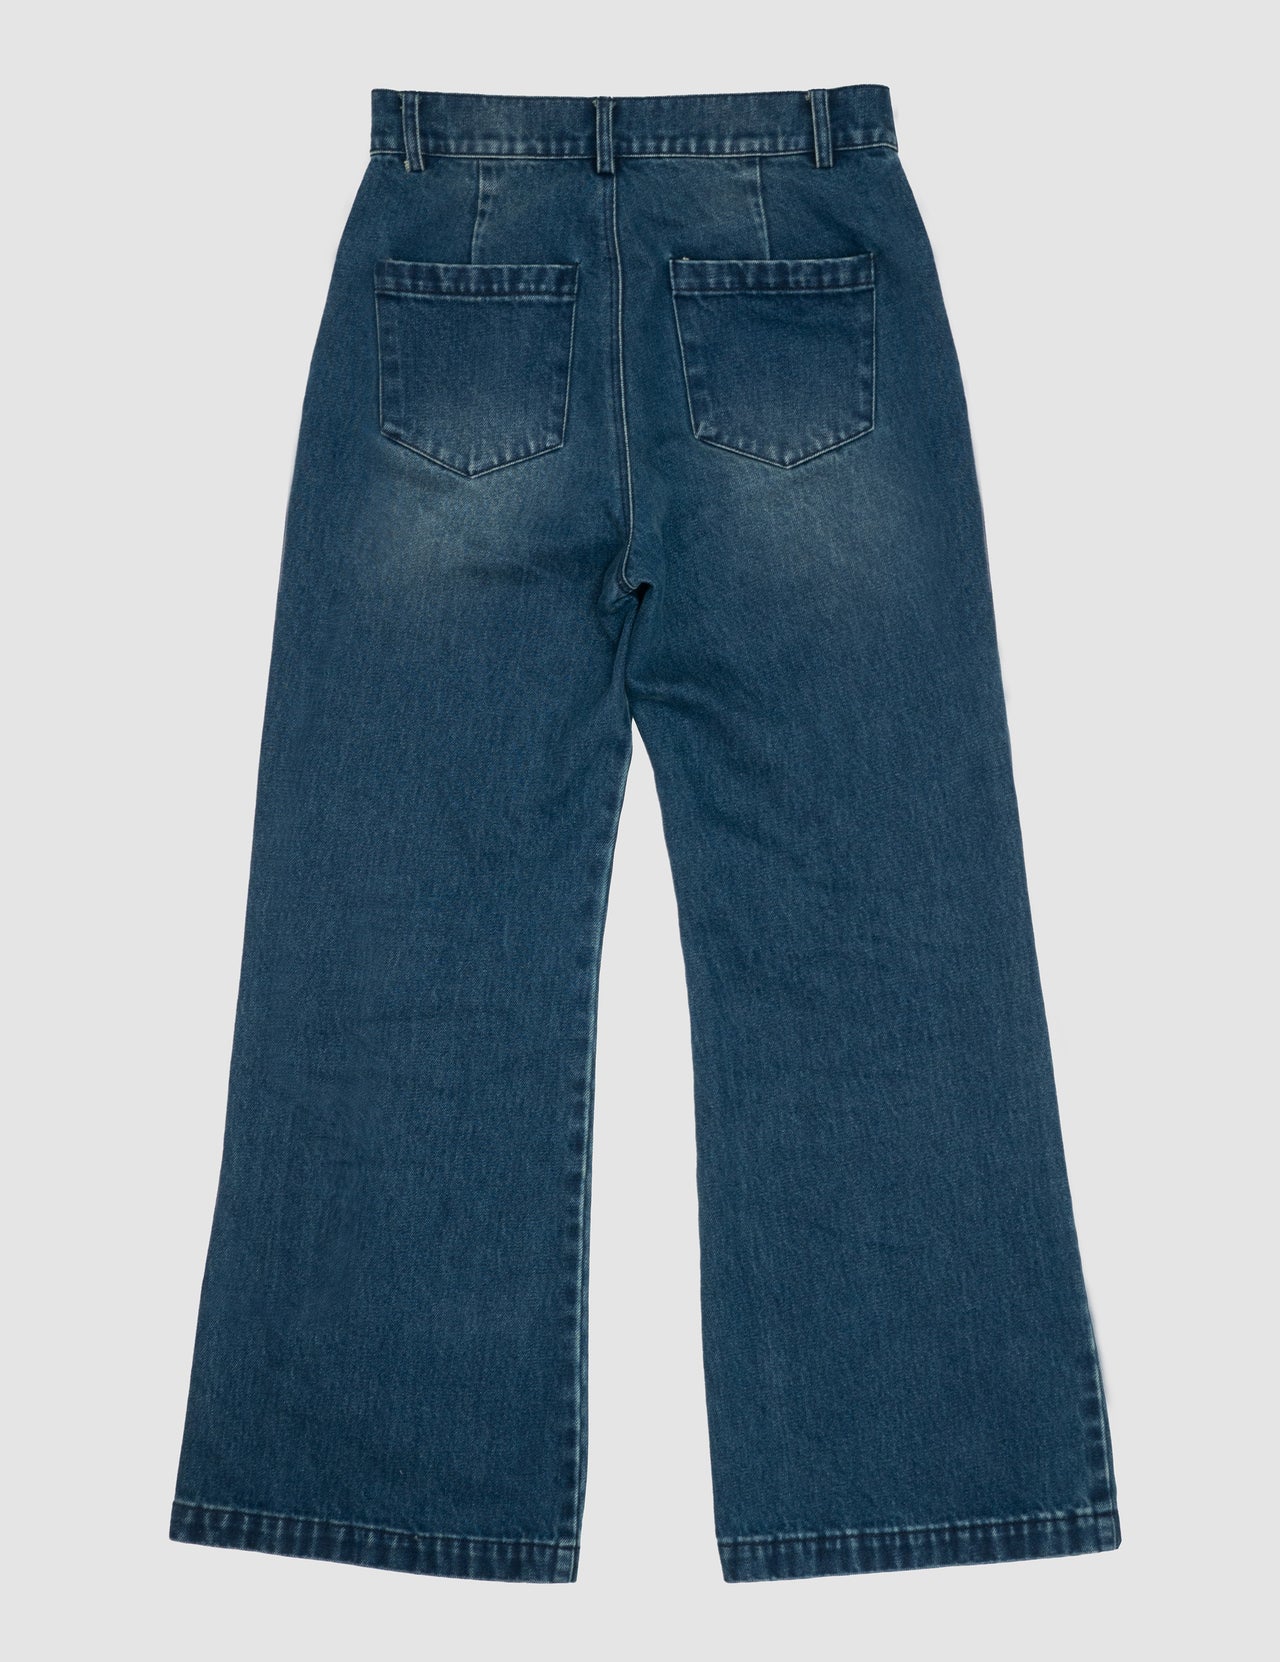 Studded Jeans (Indigo)